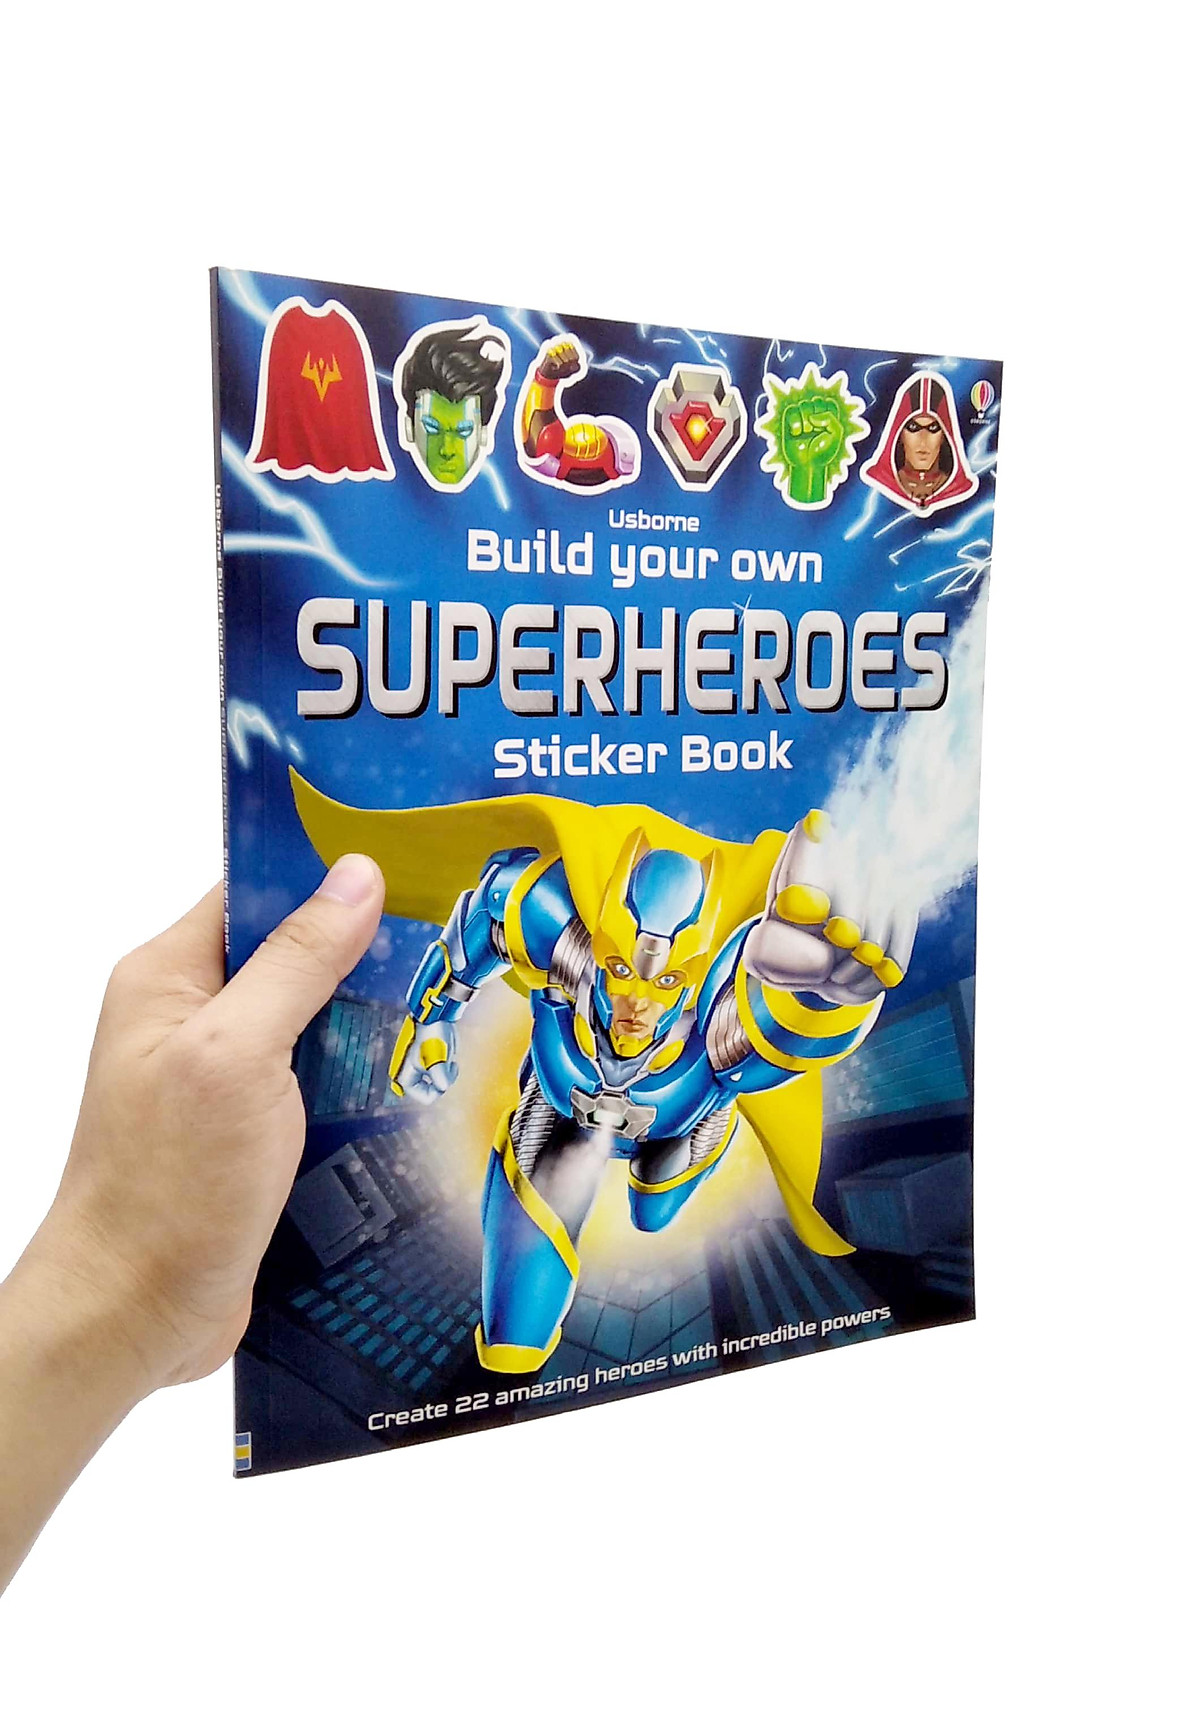 Usborne Build your own Superheroes Sticker Book